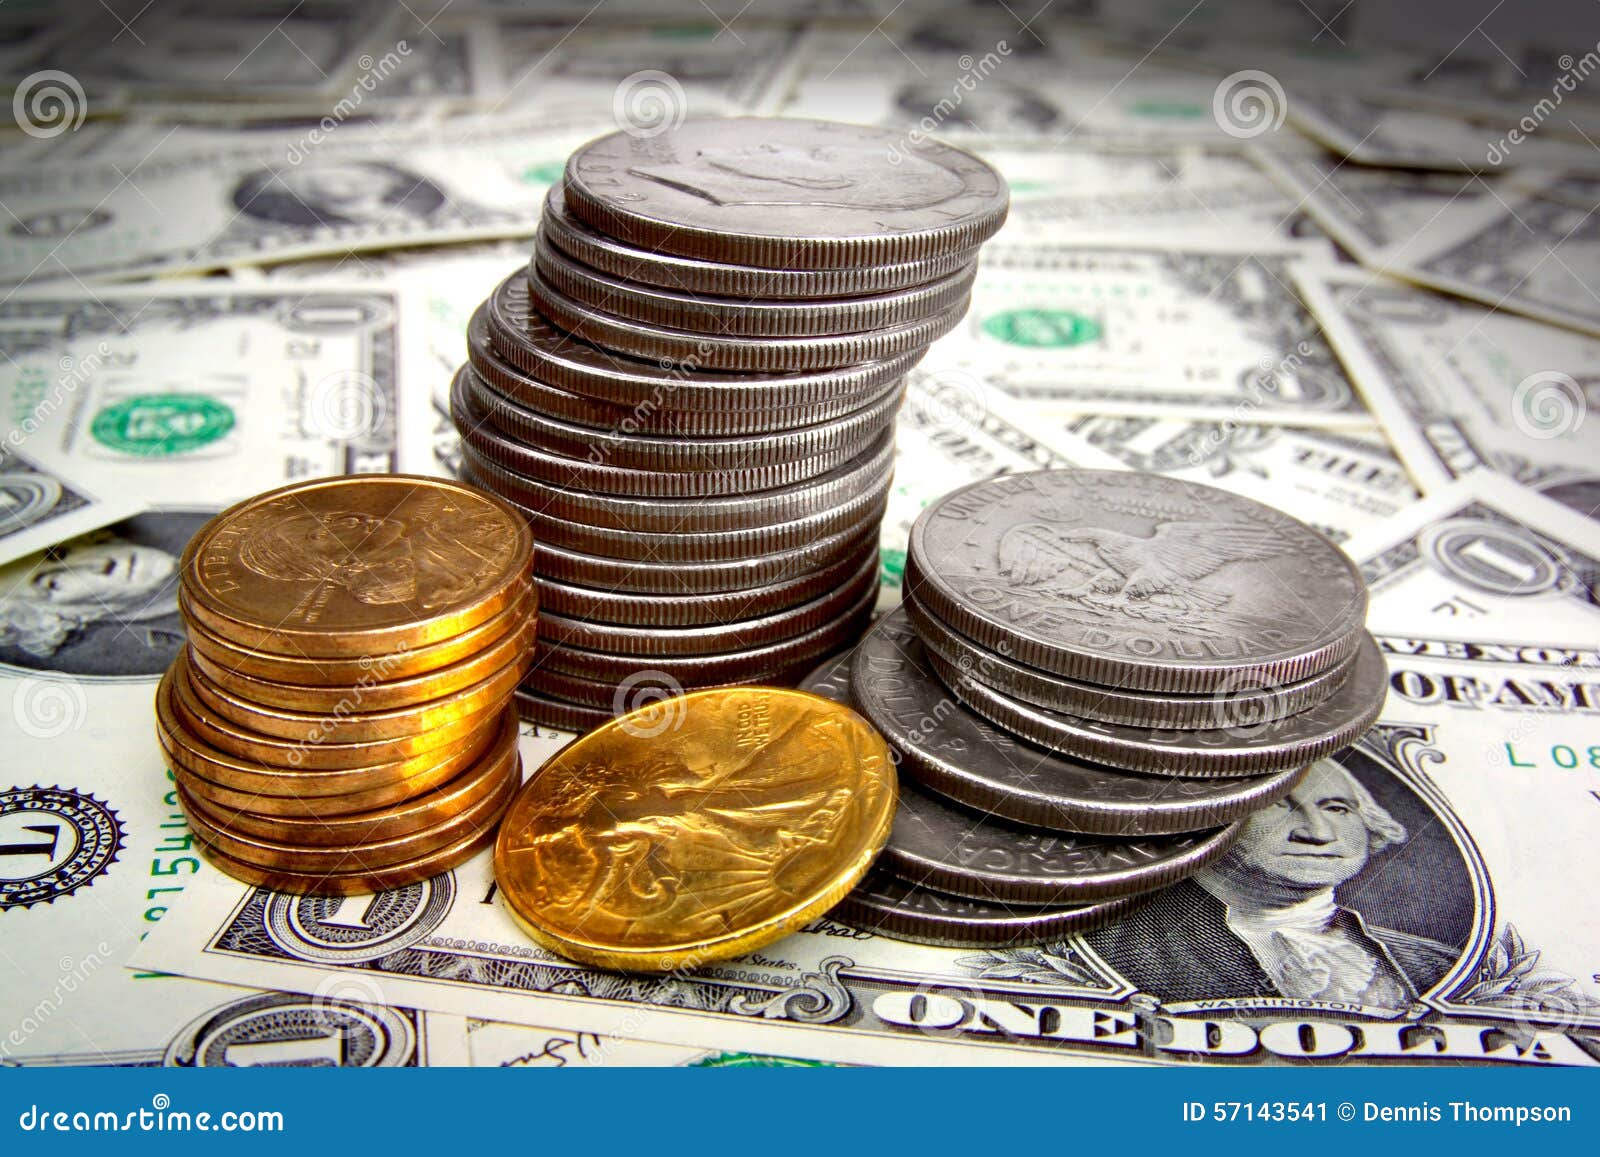 money financial planning wealth management retirement saving pile